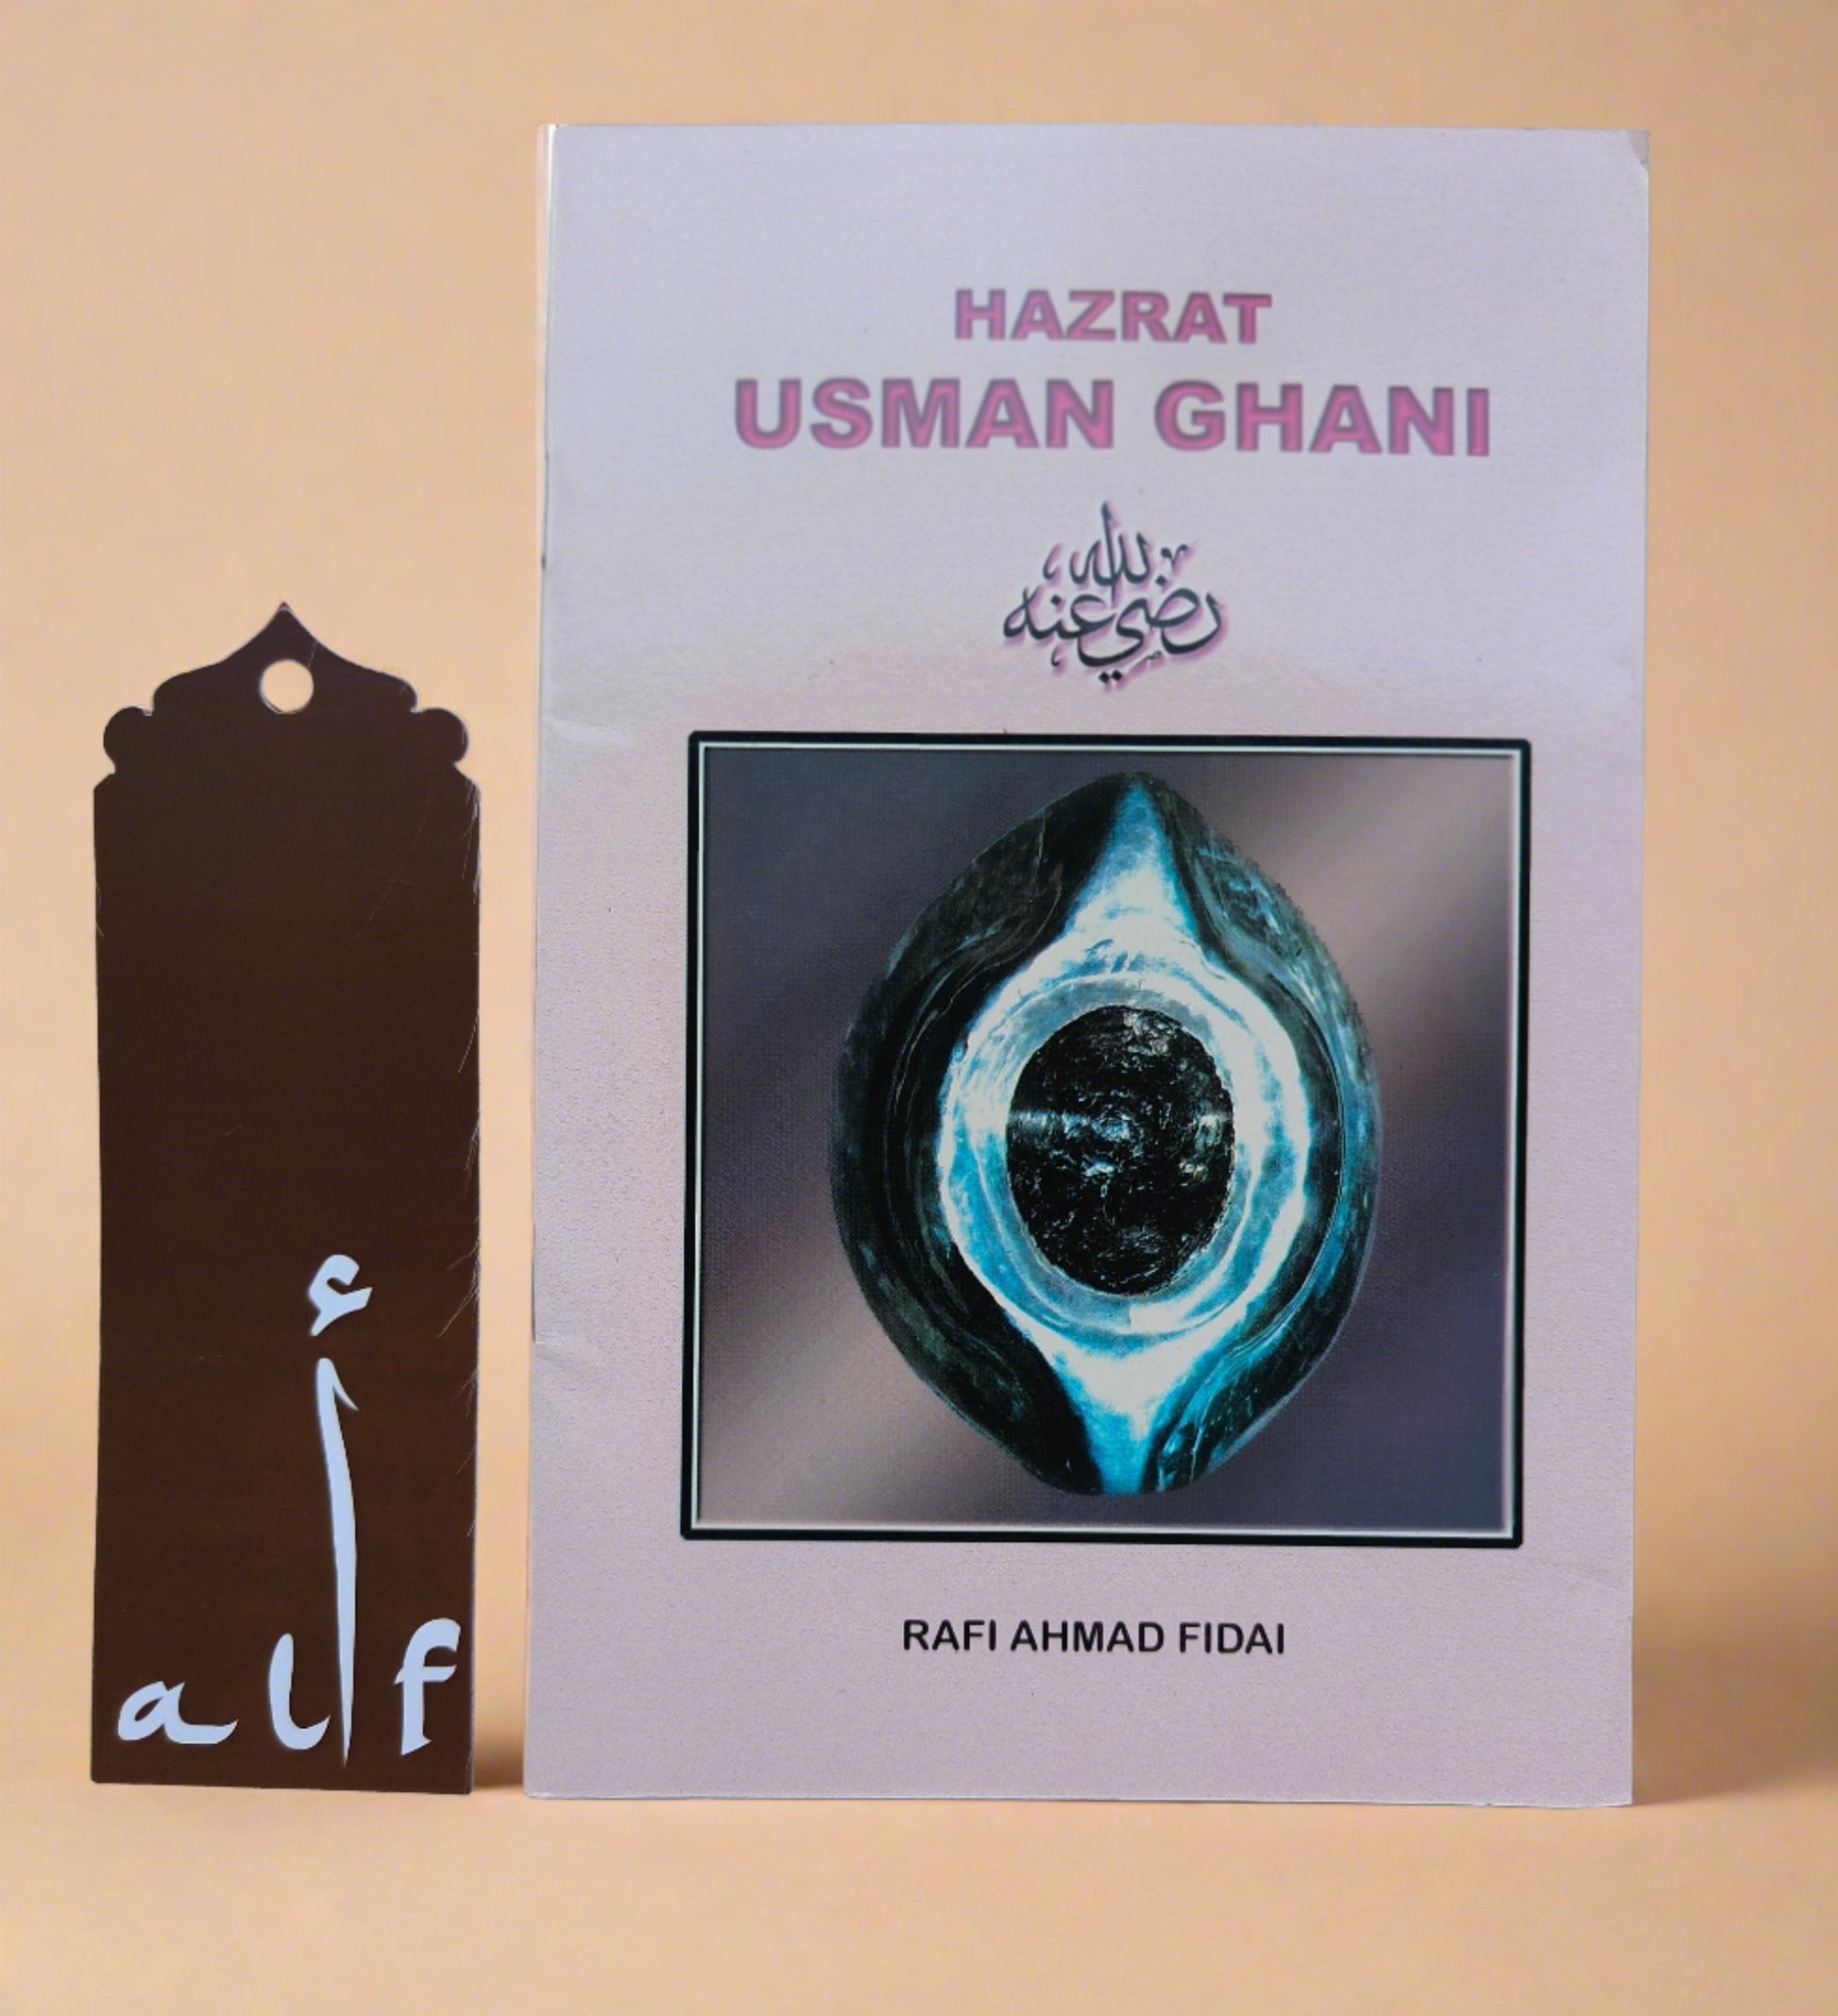 Hazrat Usman Ghani alifthebookstore